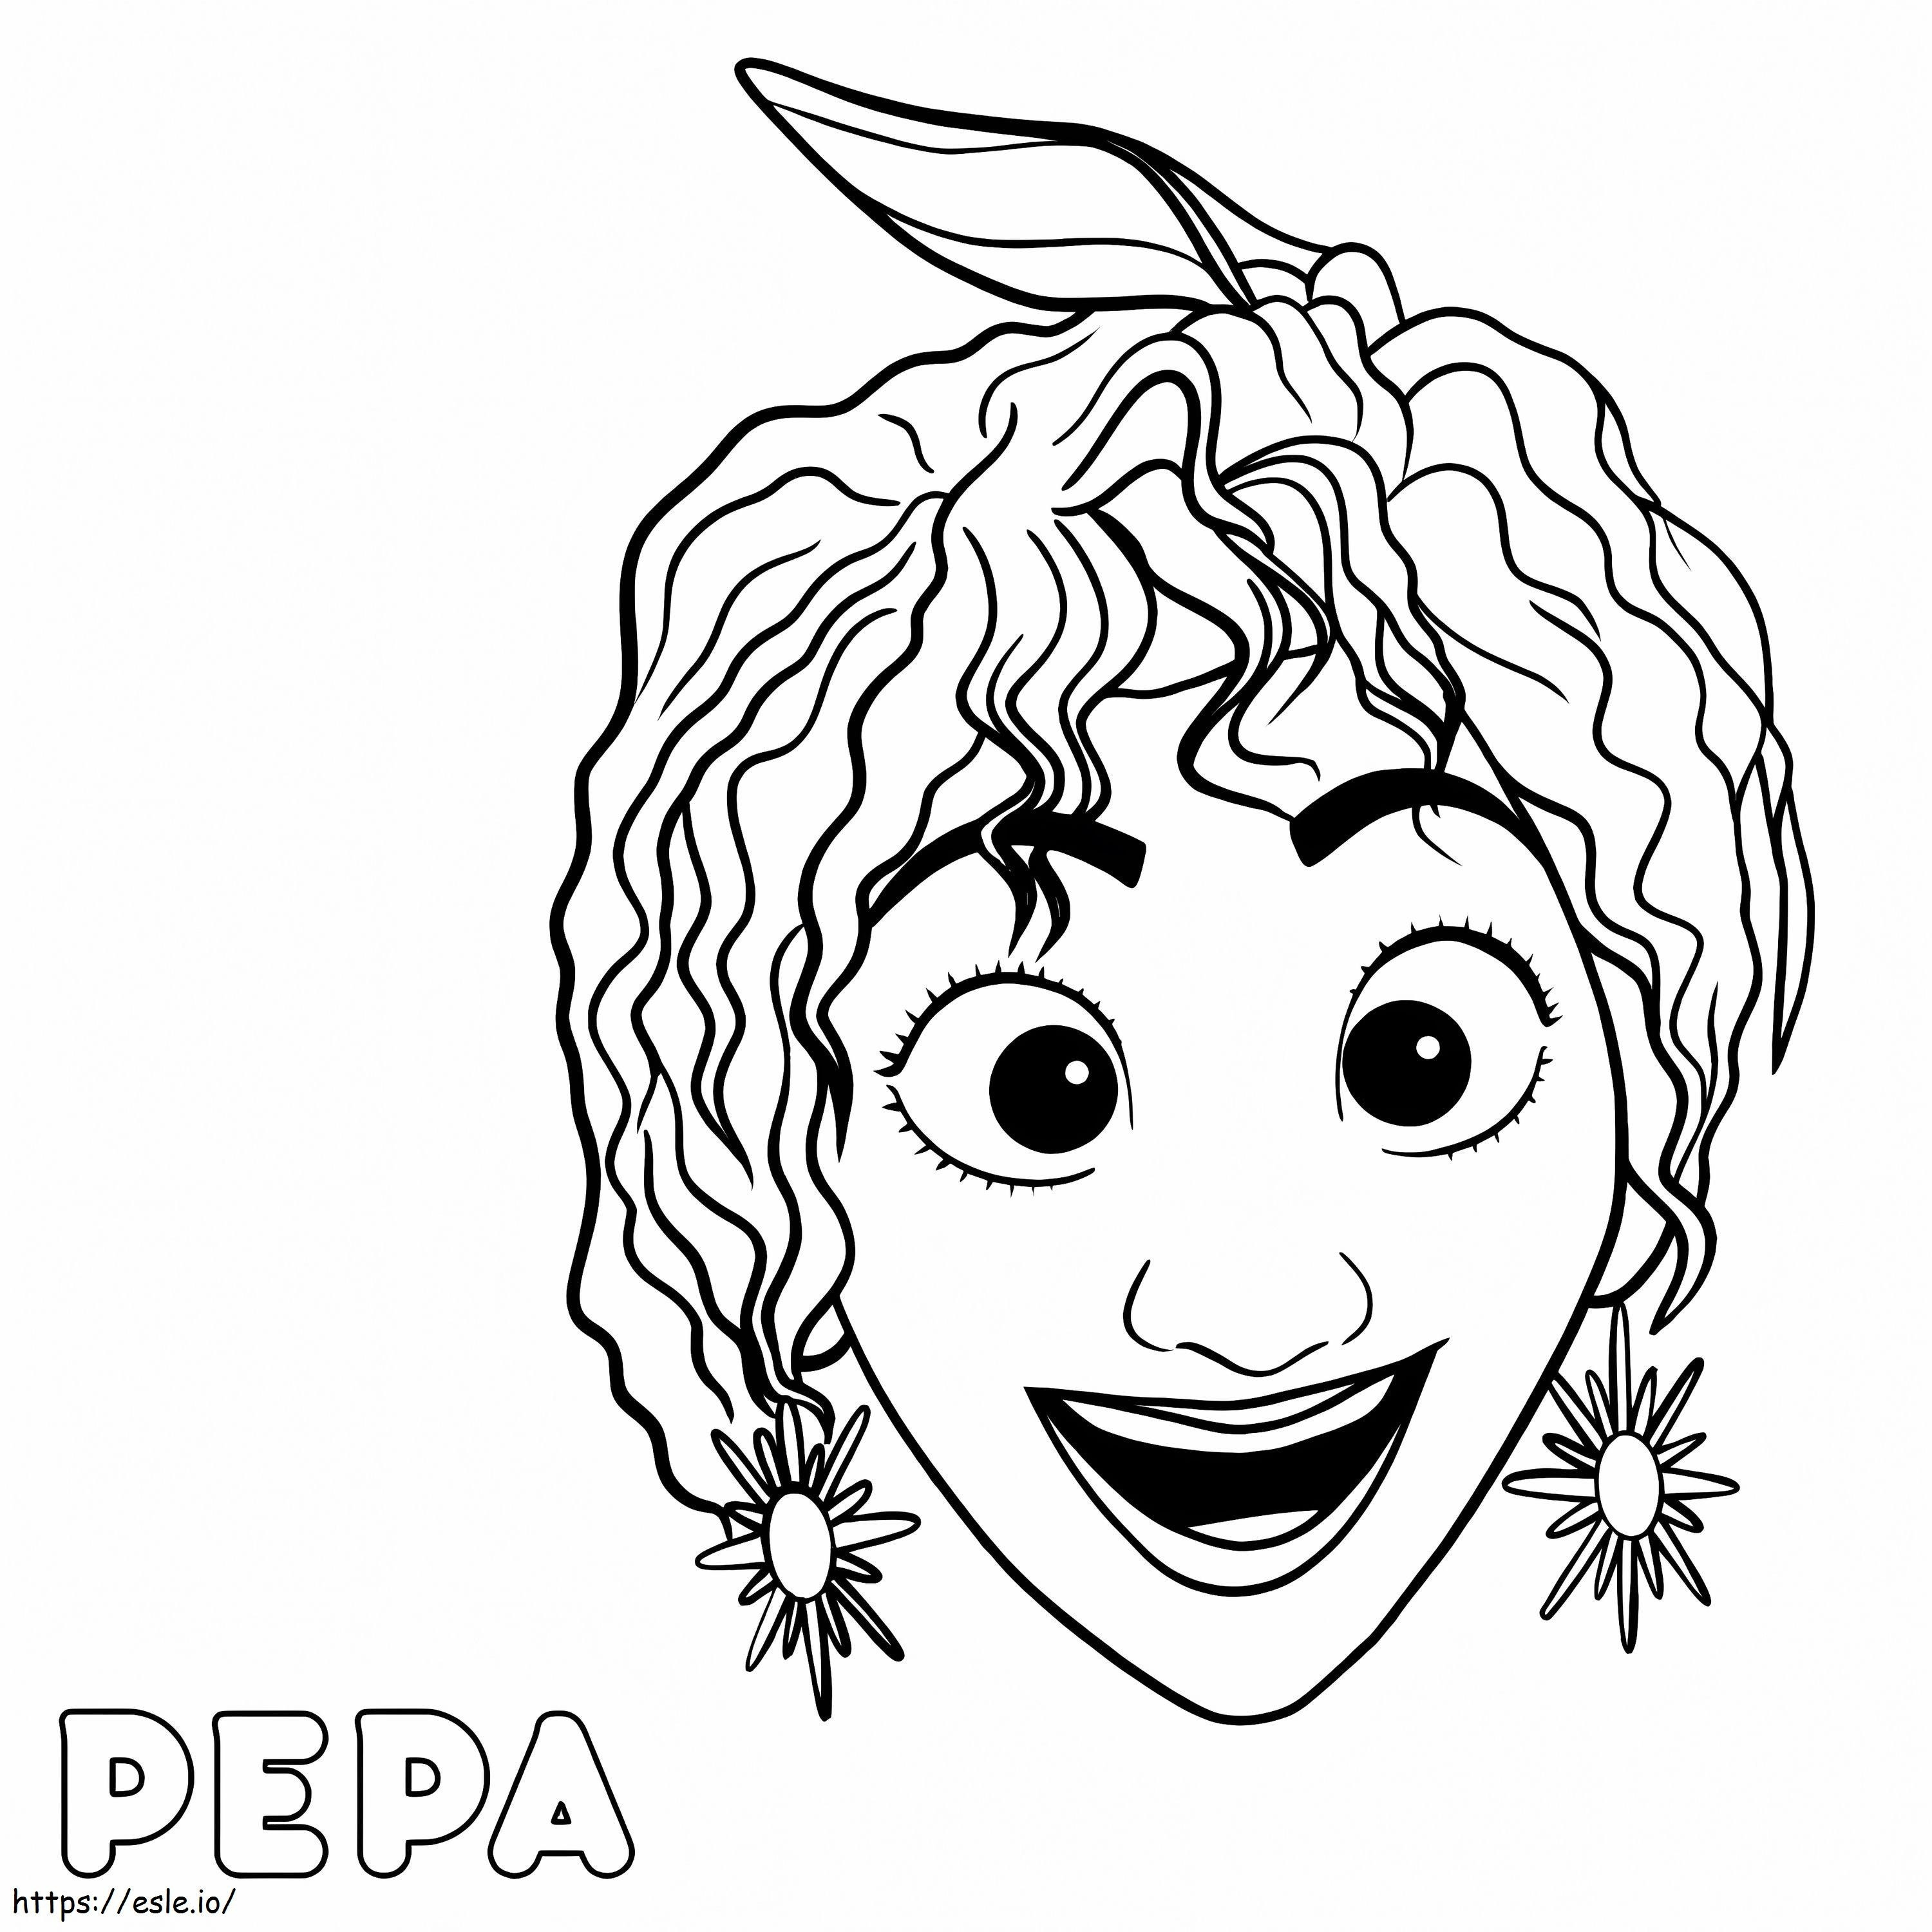 Pepa Charm coloring page